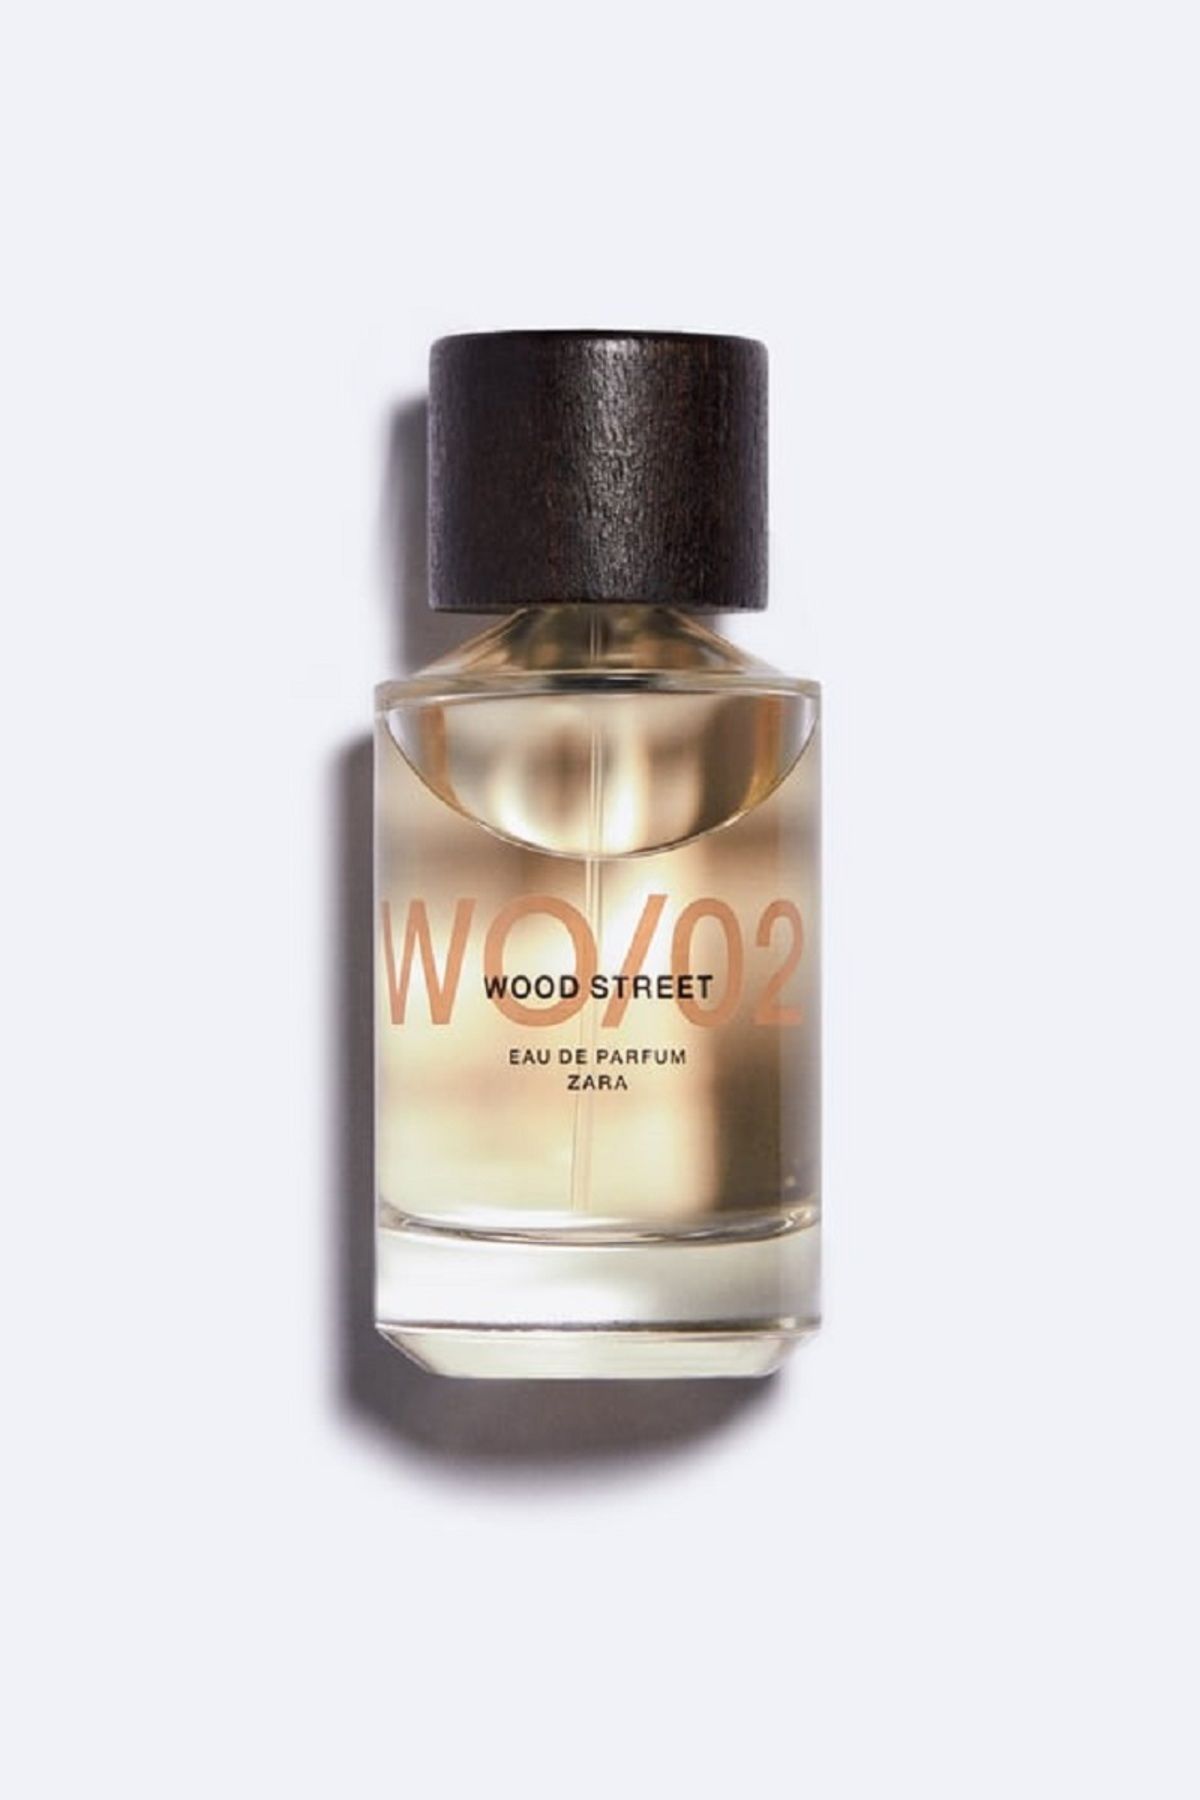 Zara WO/02 WOOD STREET ادوپرفیوم 100 ml عطر مردانه نسخه ویژه